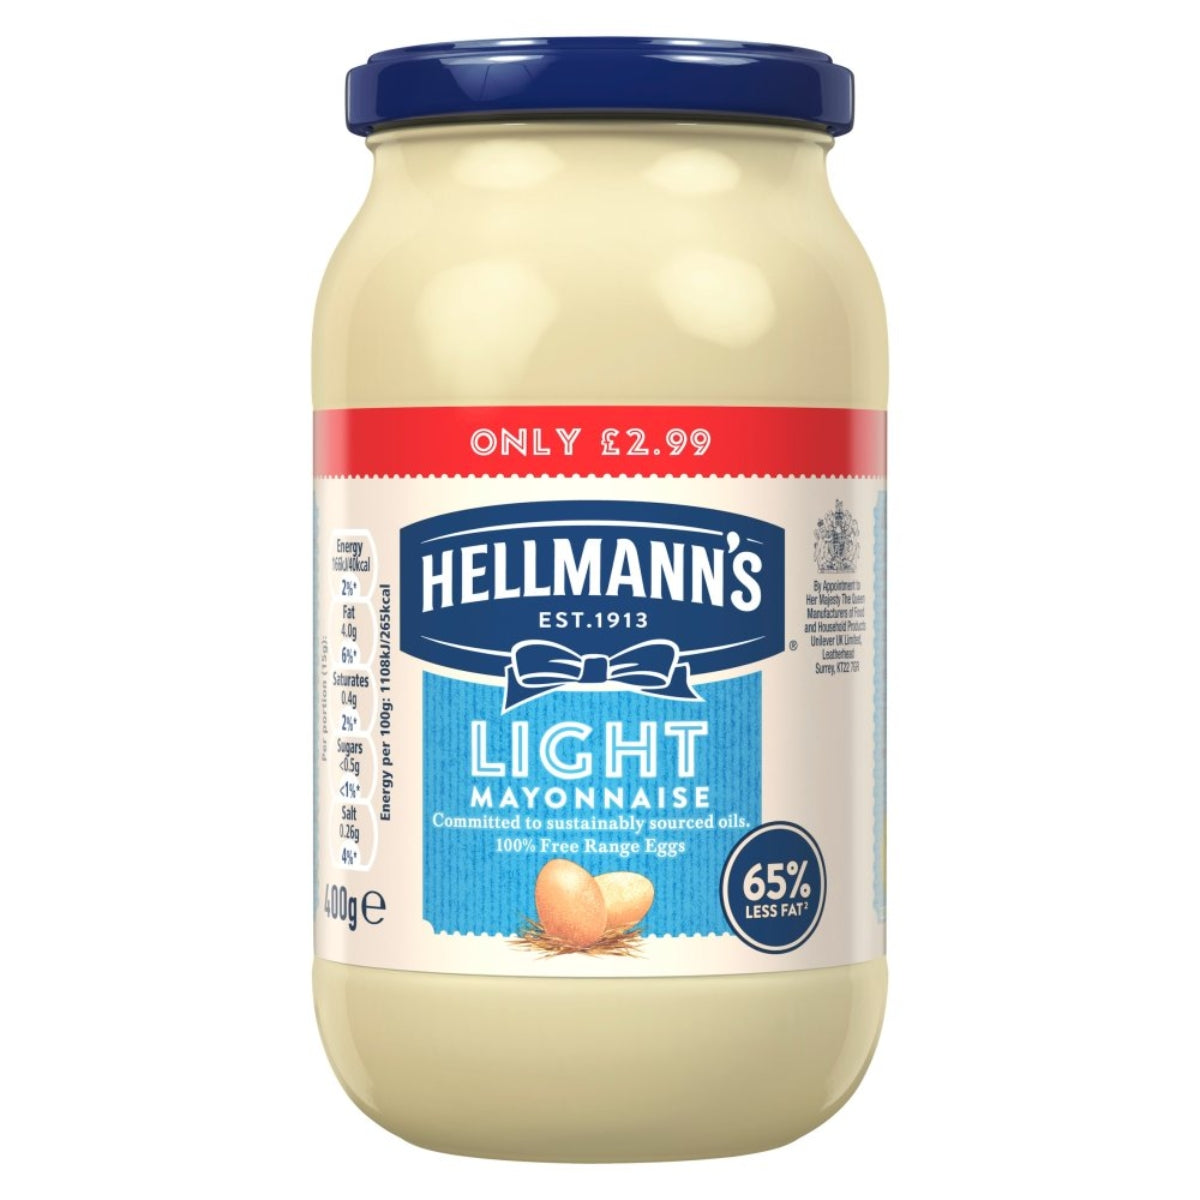 A Hellmann's - Light Mayonnaise Jar - 400g on a white background.